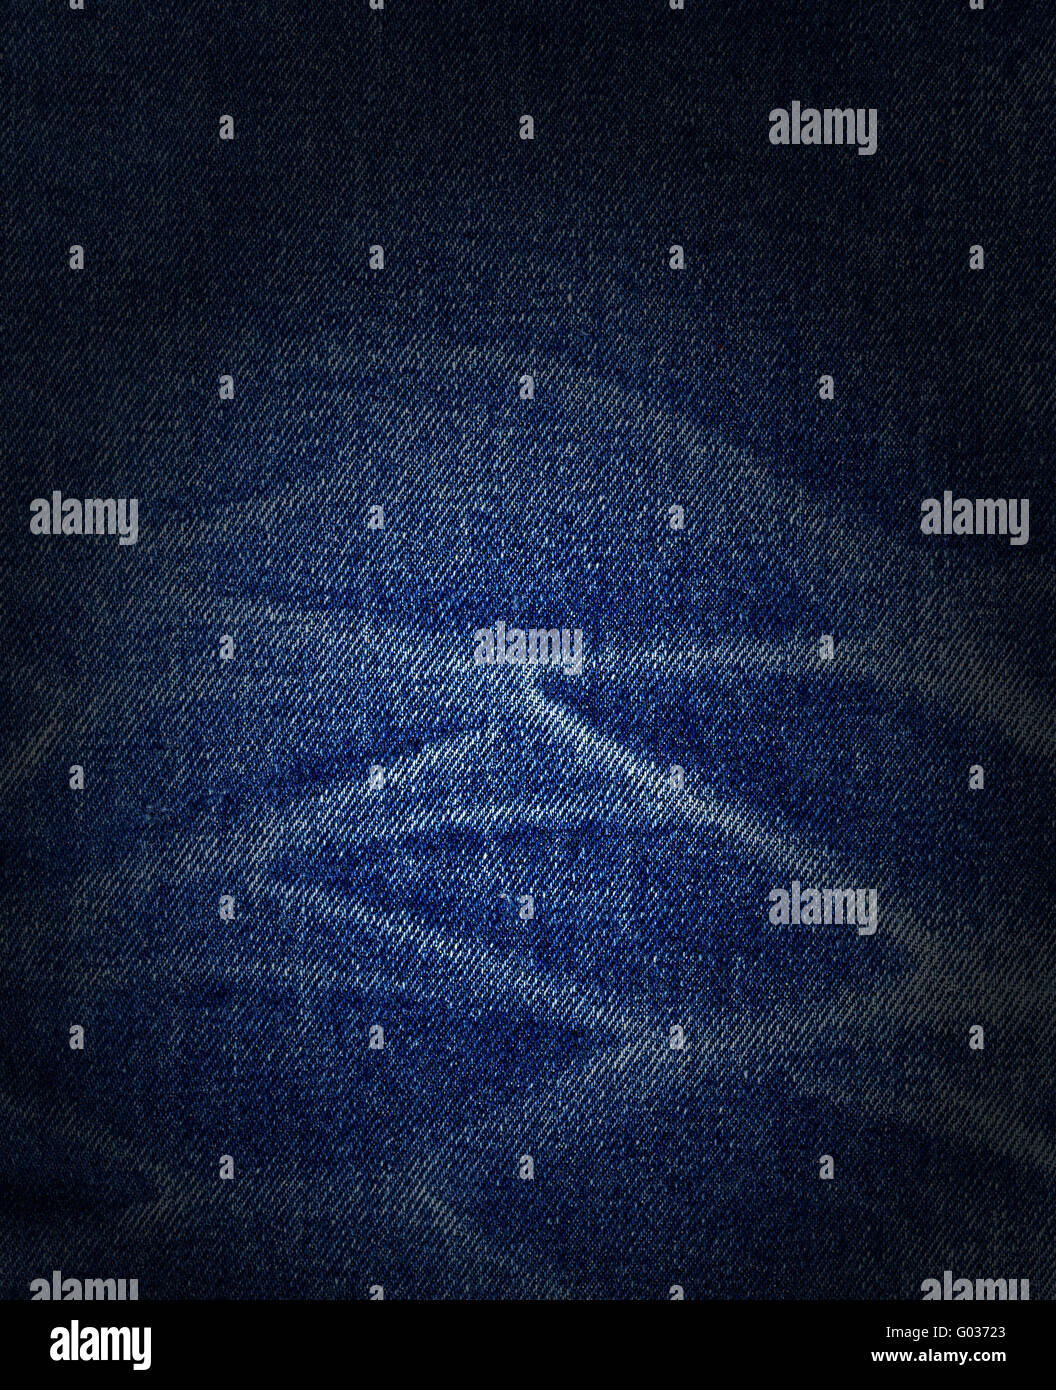 Textured creased linen striped denim jeans grunge background Stock Photo